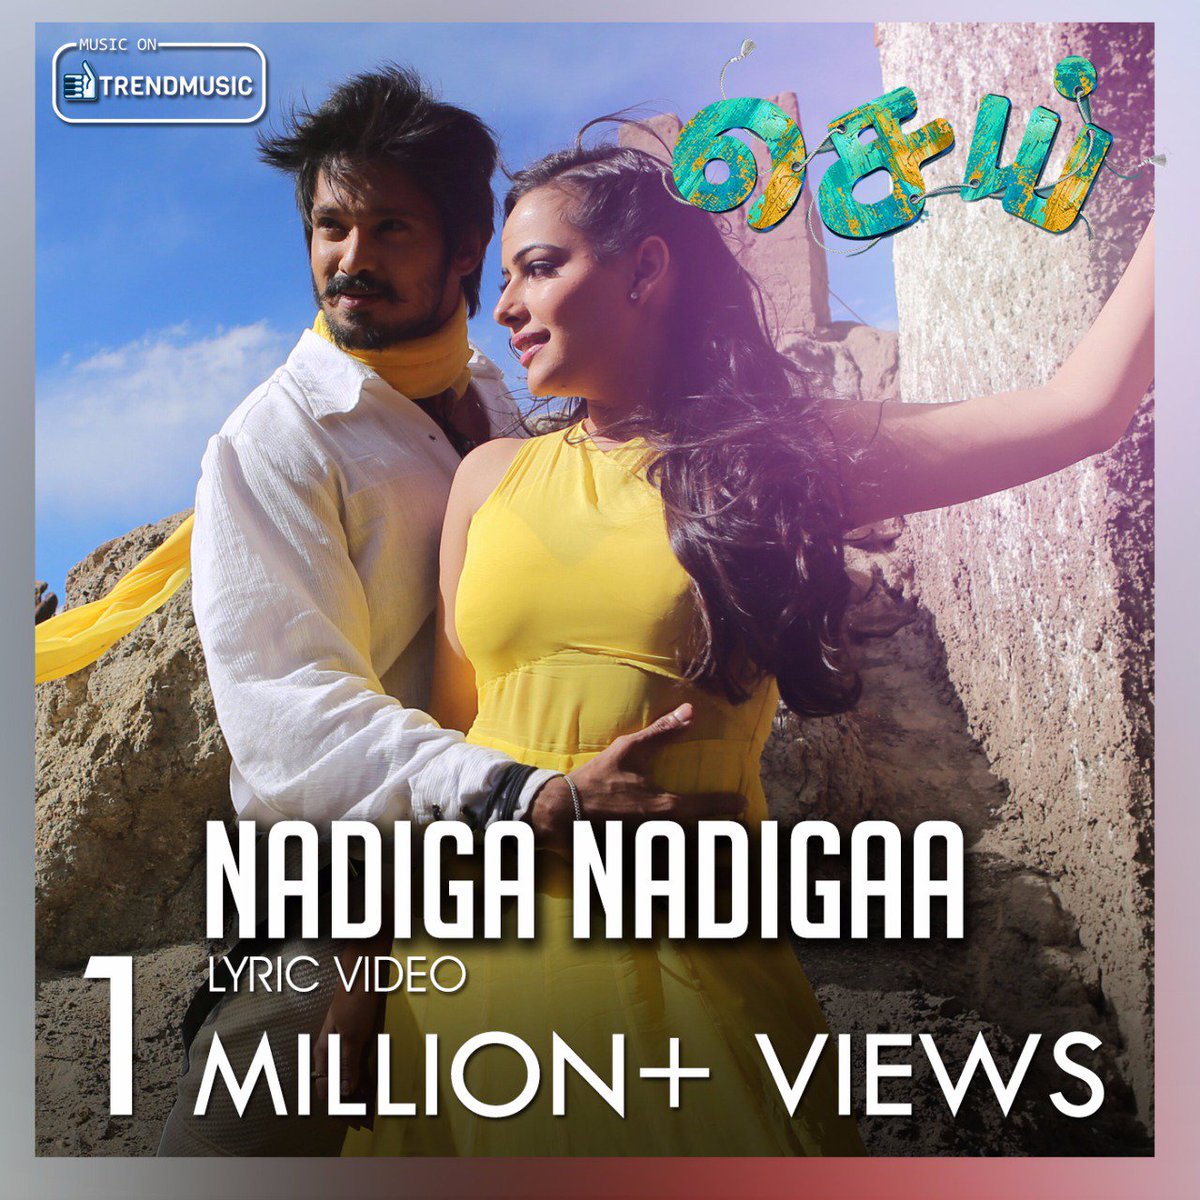 1 million views for #NadigaNadigaa lyrics video @NyxLopez @shreyaghoshal #sonunigam for this MAGIC @Nakkhul_Jaidev @AanchalOfficial @YugabhaarathiY @seithefilm @chandrikaravi_ @TrippyTurtle10 @MannuDxb